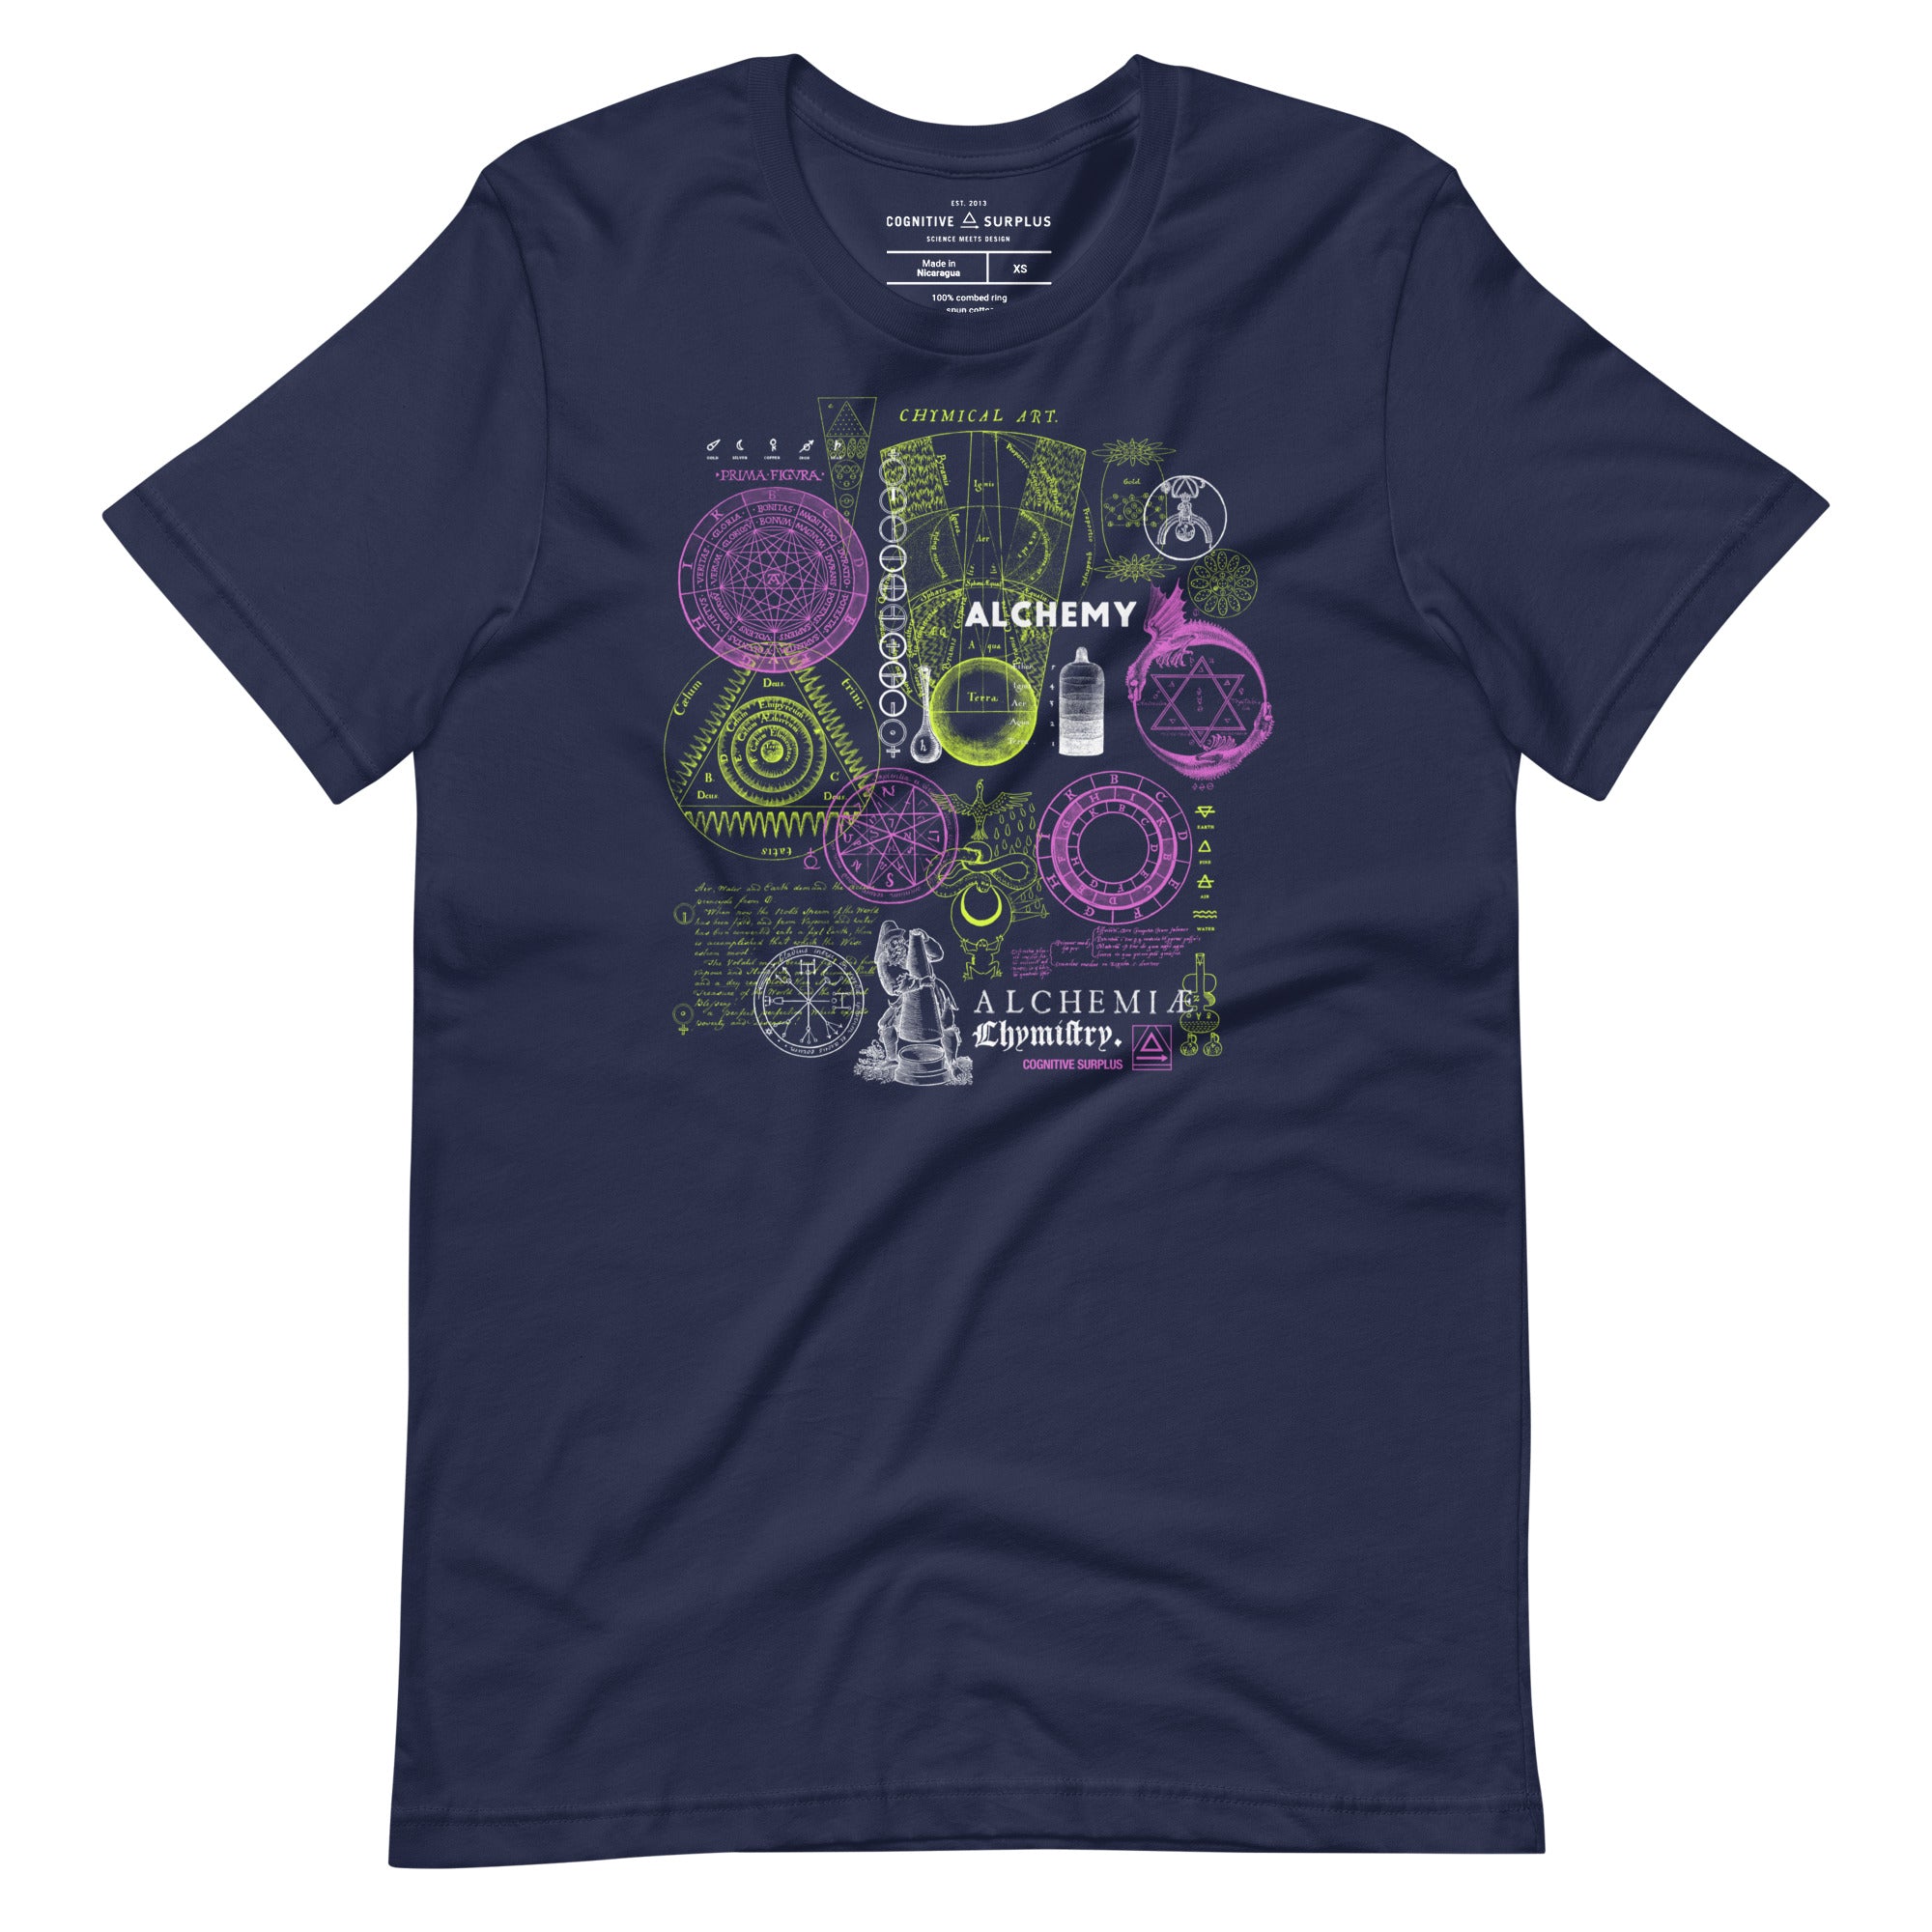 unisex-staple-t-shirt-navy-front-659eef59d1b3f.jpg